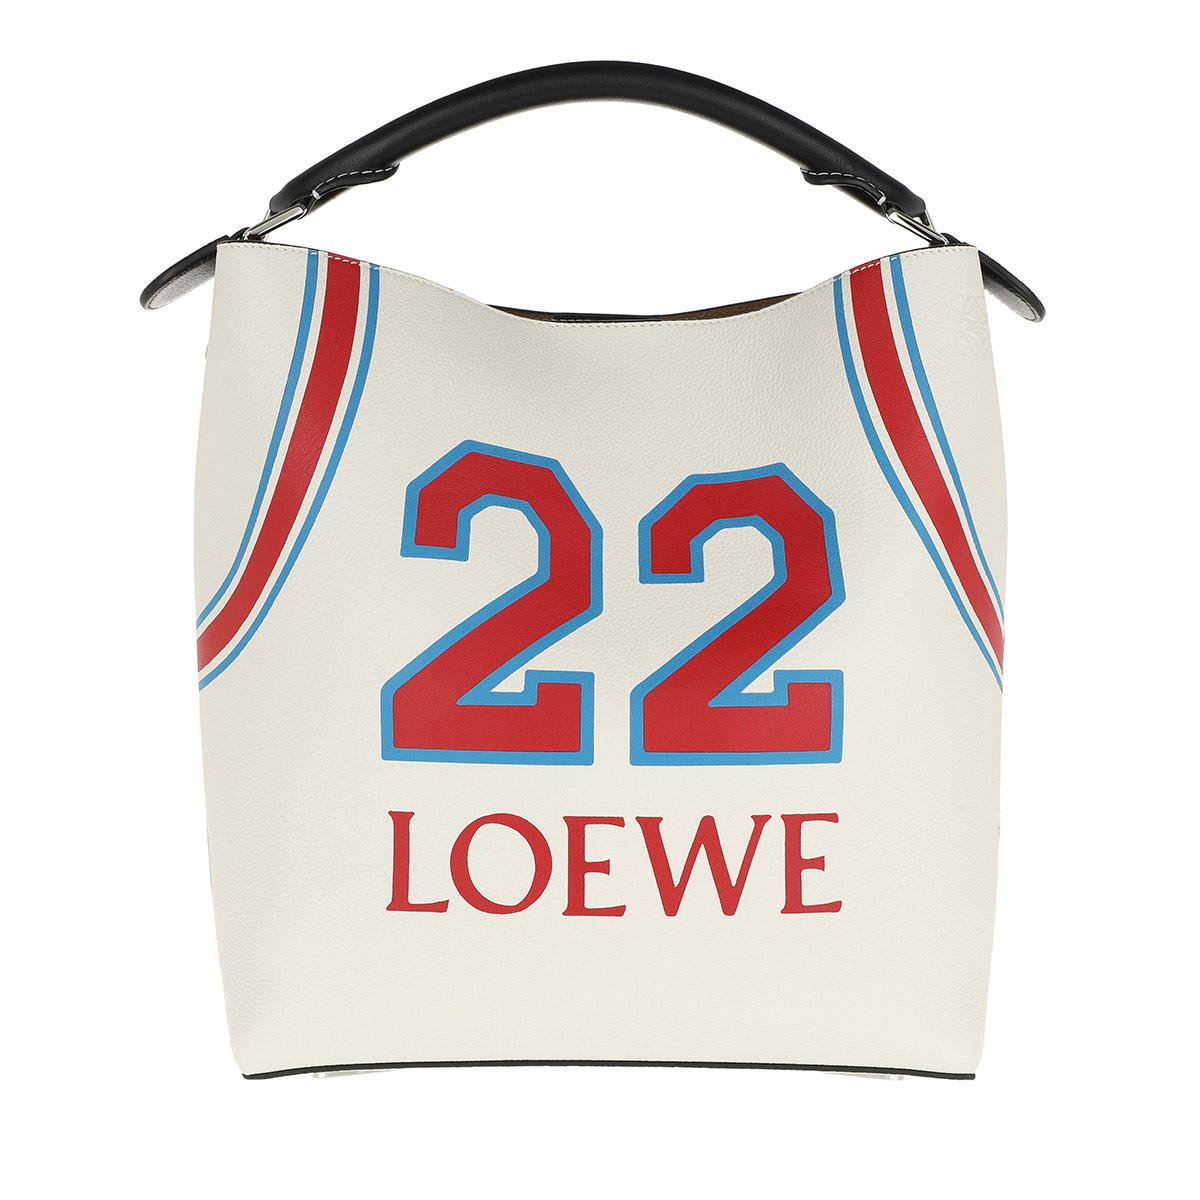 Loewe T Bucket Loewe 22 Bag Soft White 